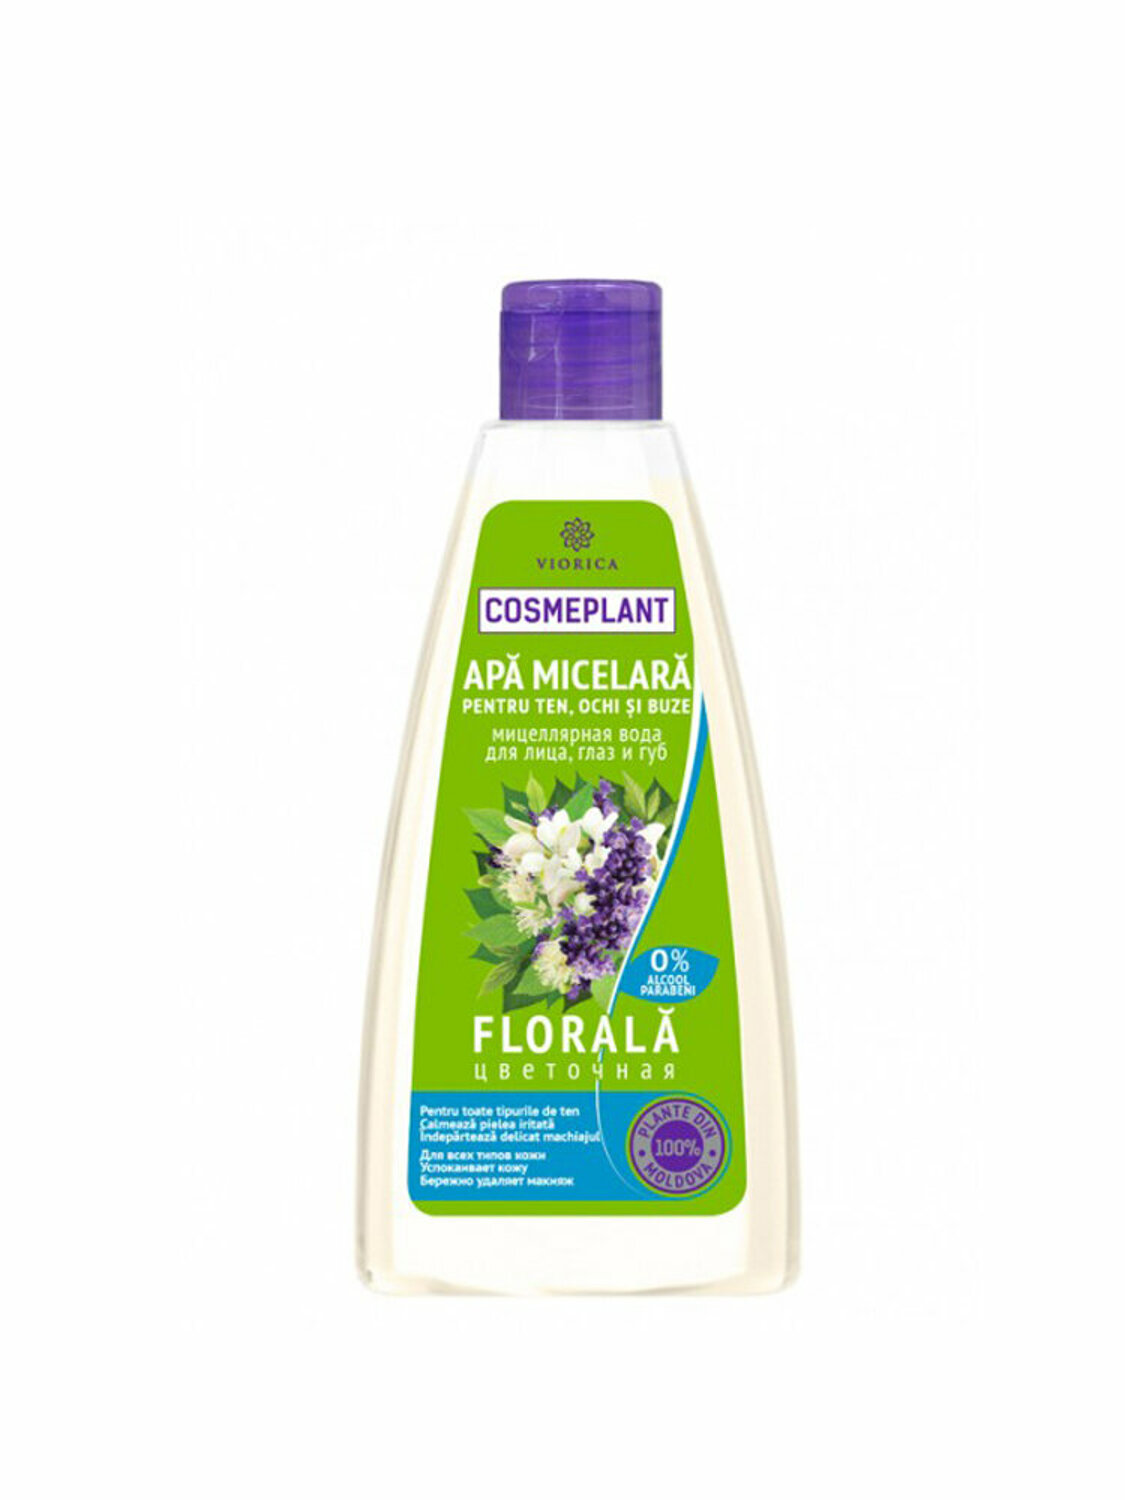 Apa micelara florala cosmeplant - Viorica - 200 ml | Viorica